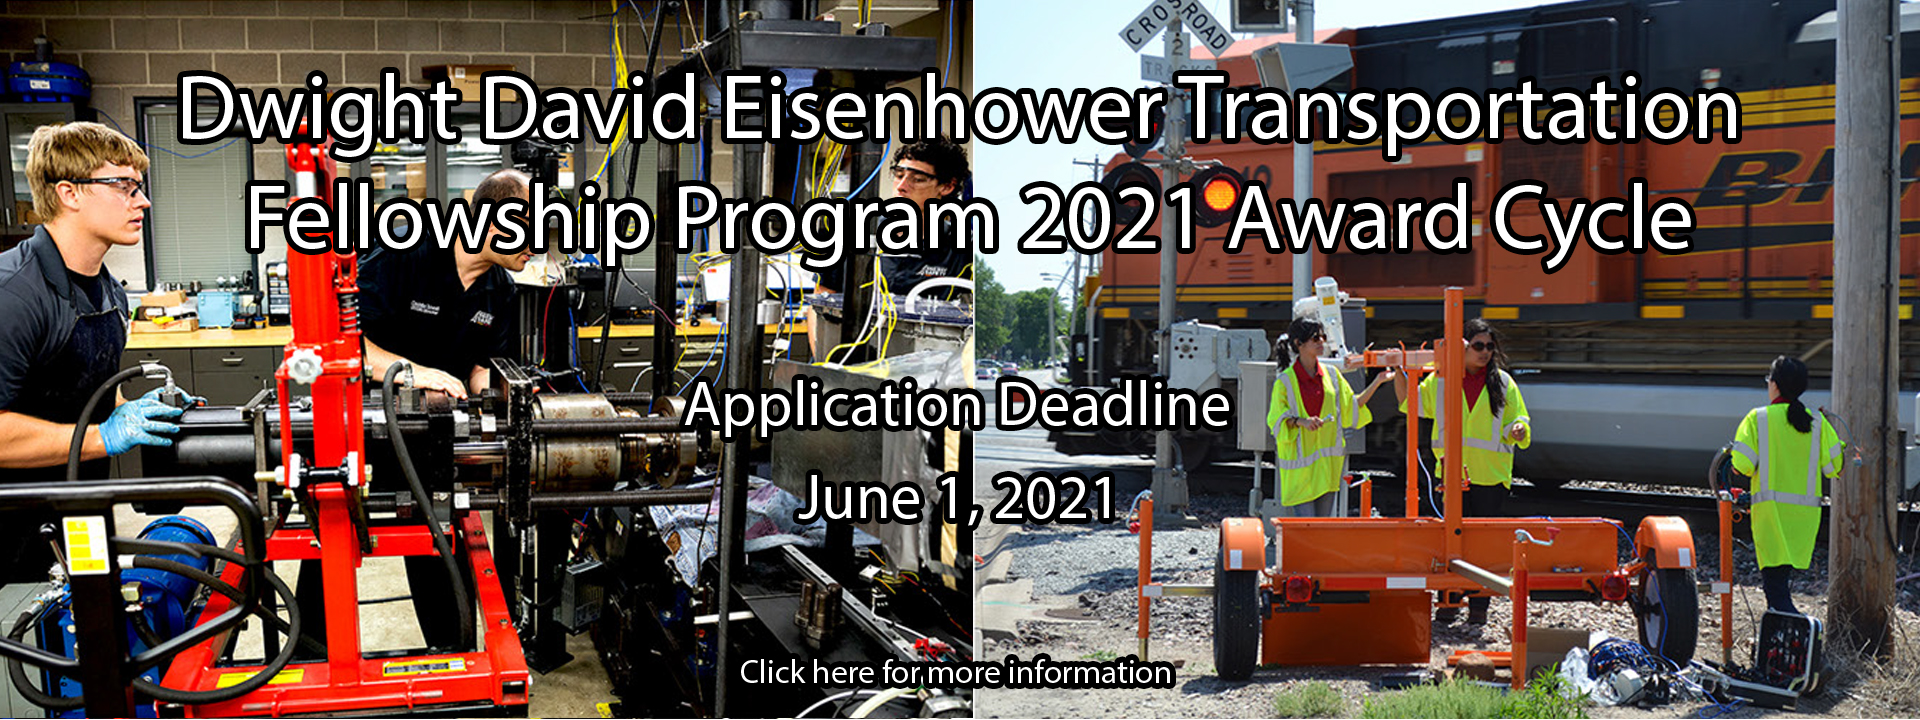 Link to the Dwight David Eisenhower Transportation Fellowship Program